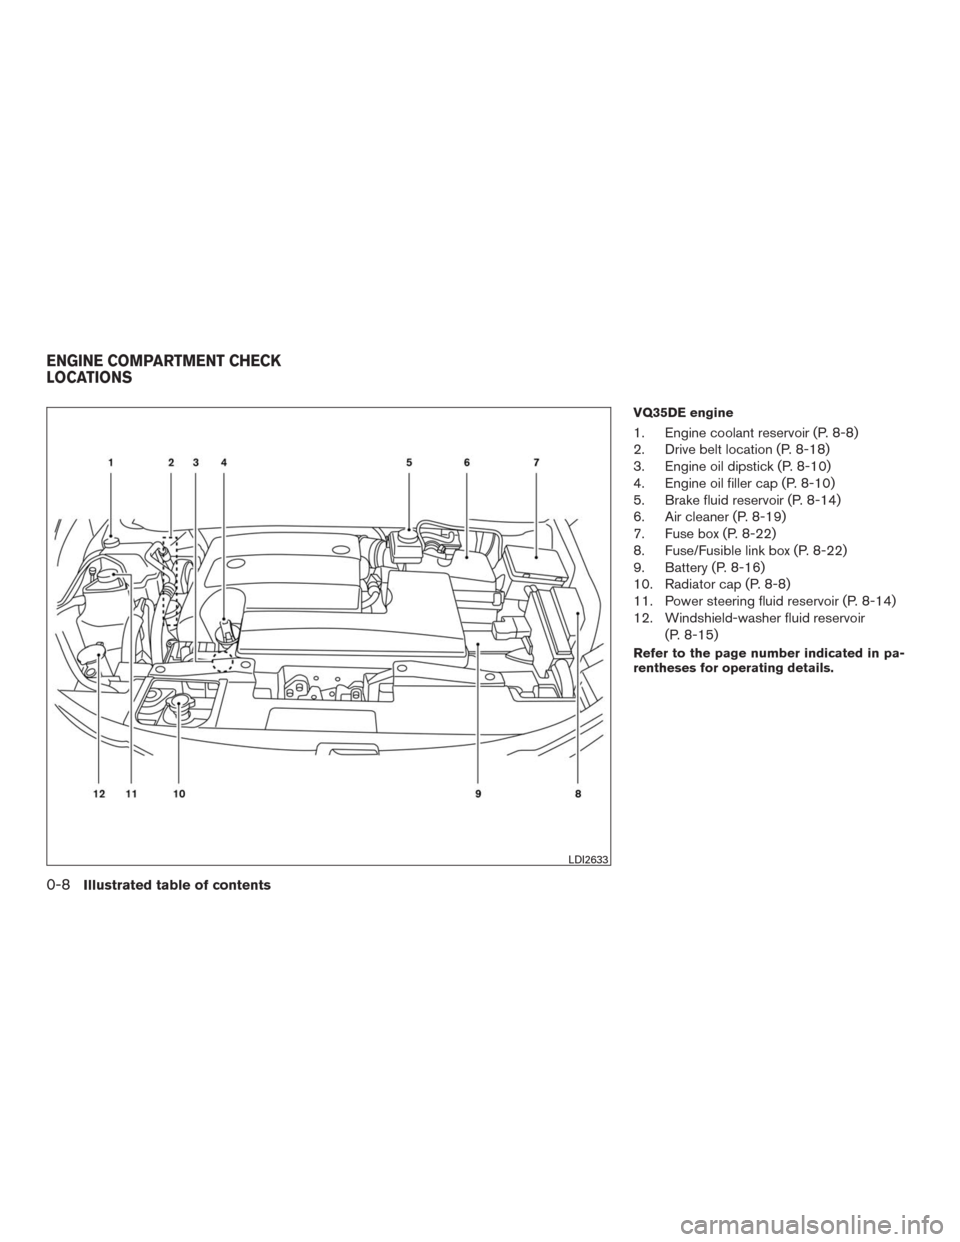 NISSAN MURANO 2016 3.G Owners Manual VQ35DE engine
1. Engine coolant reservoir (P. 8-8)
2. Drive belt location (P. 8-18)
3. Engine oil dipstick (P. 8-10)
4. Engine oil filler cap (P. 8-10)
5. Brake fluid reservoir (P. 8-14)
6. Air cleane